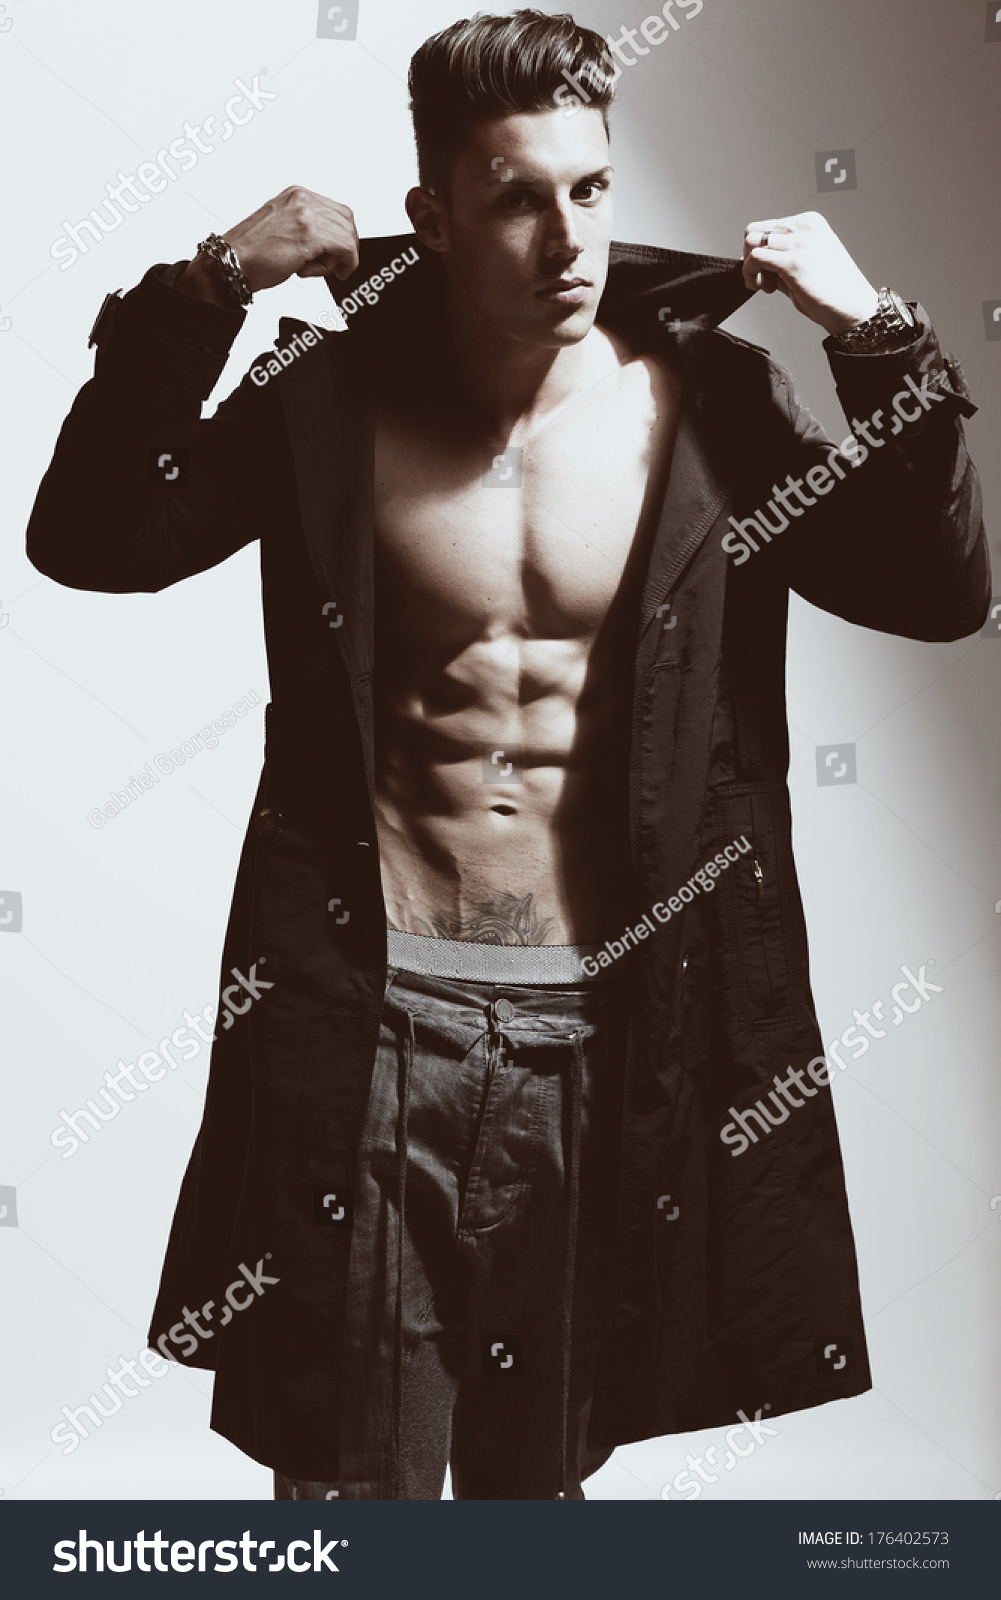 Sexy Guy Posinggood Looking Stock Photo 176402576 Shutterstock